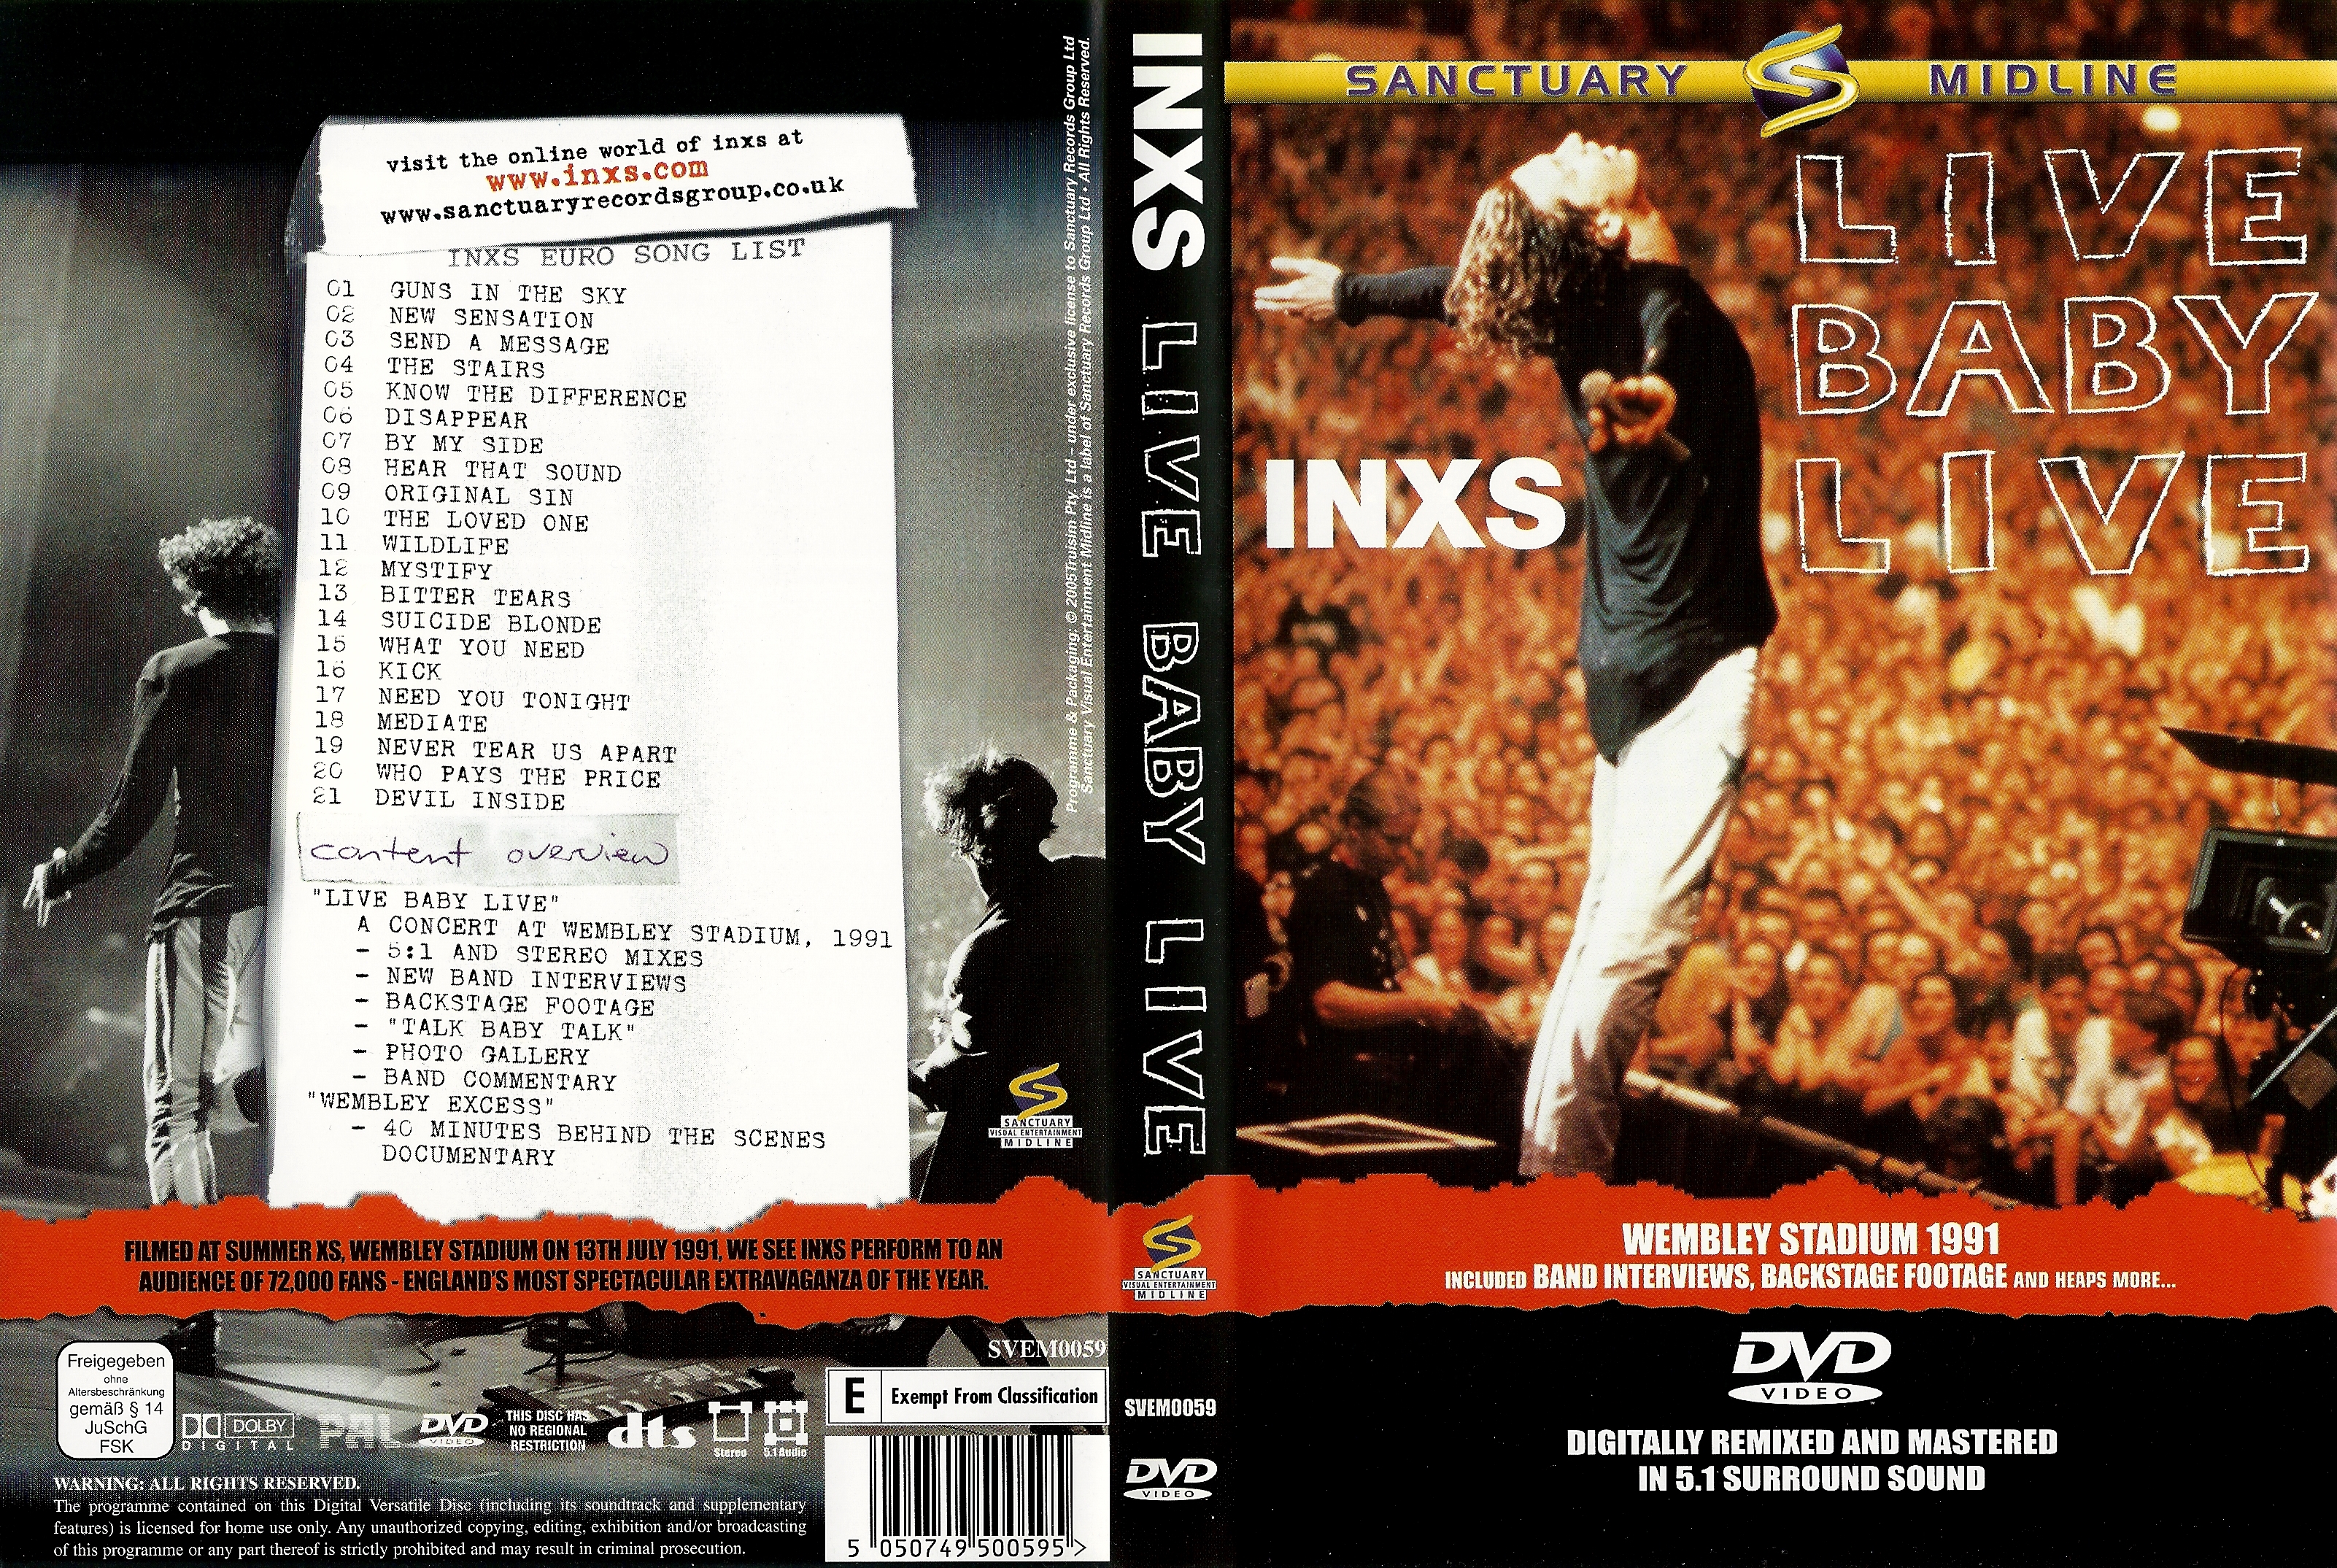 Jaquette DVD INXS - live baby live wembley 1991 v2